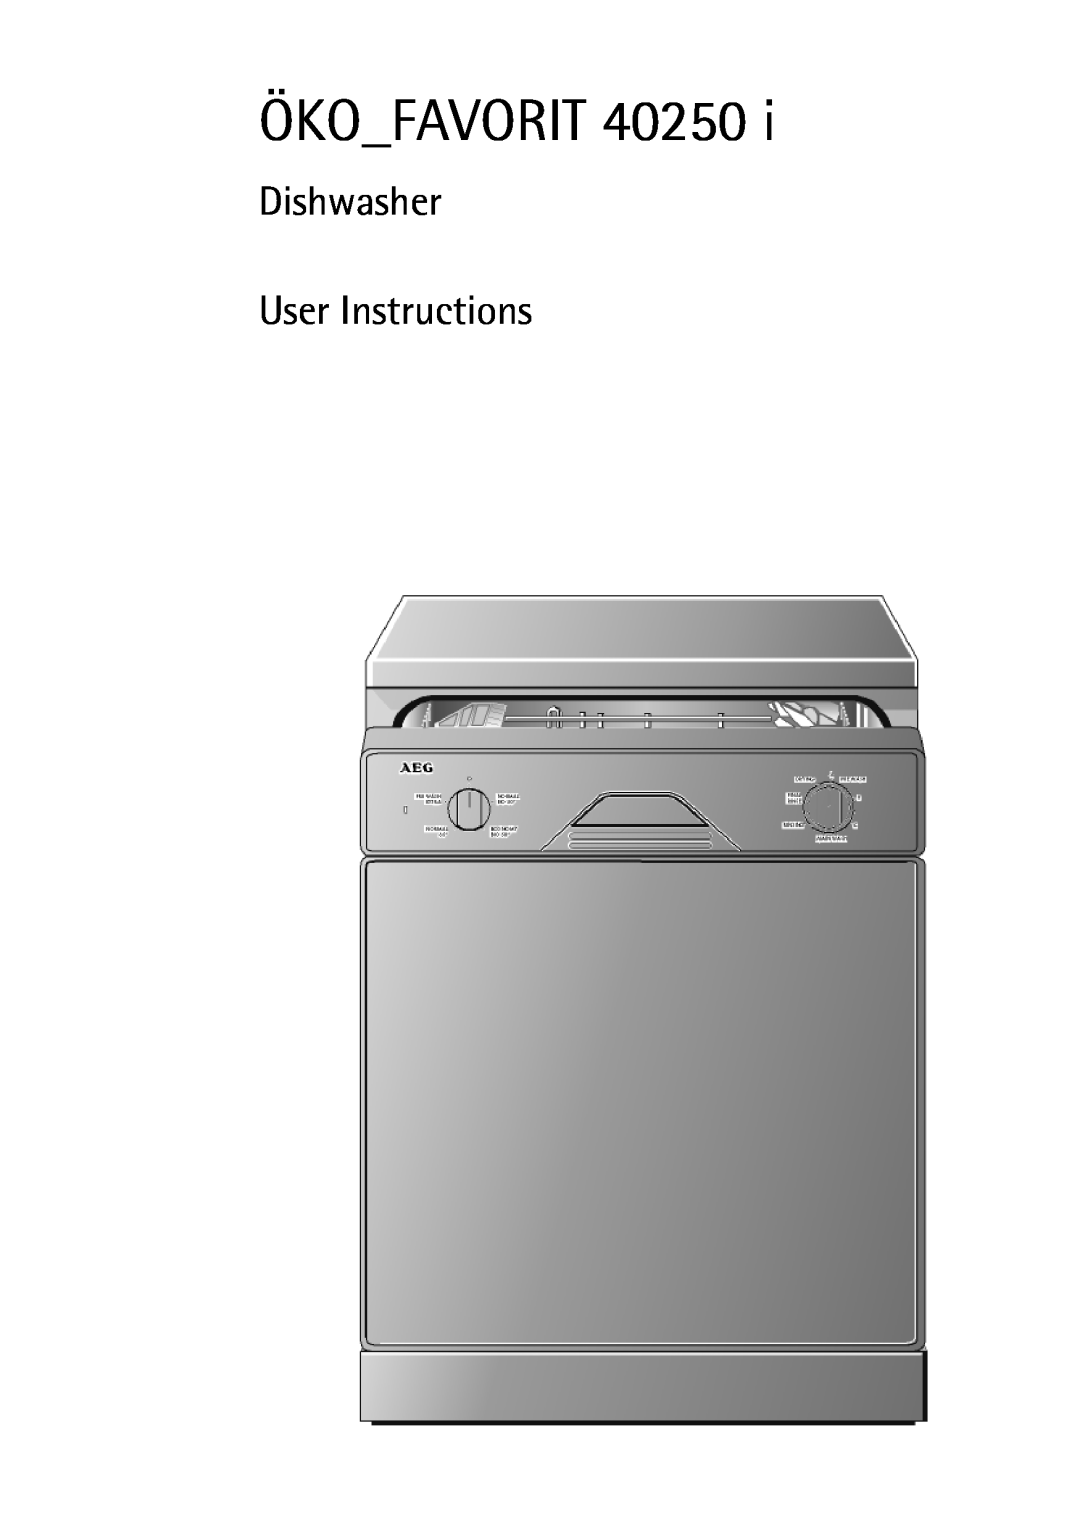 Electrolux 40250 i manual ÖKOFAVORIT 40250, Dishwasher User Instructions 